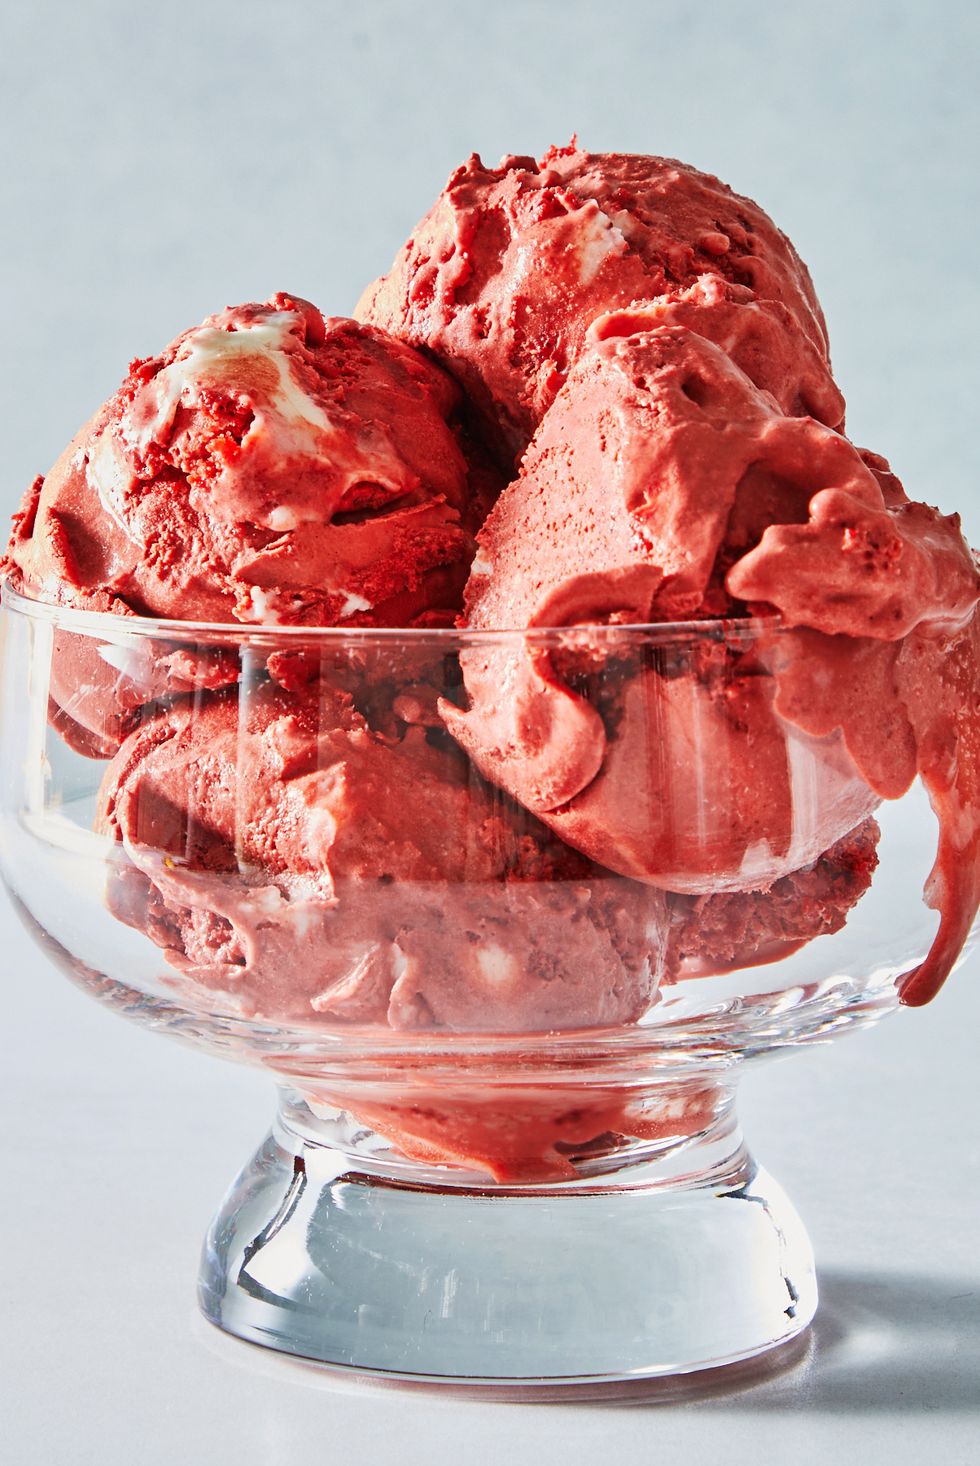 50 Homemade Ice Cream Recipes How To Make Ice Cream At Home